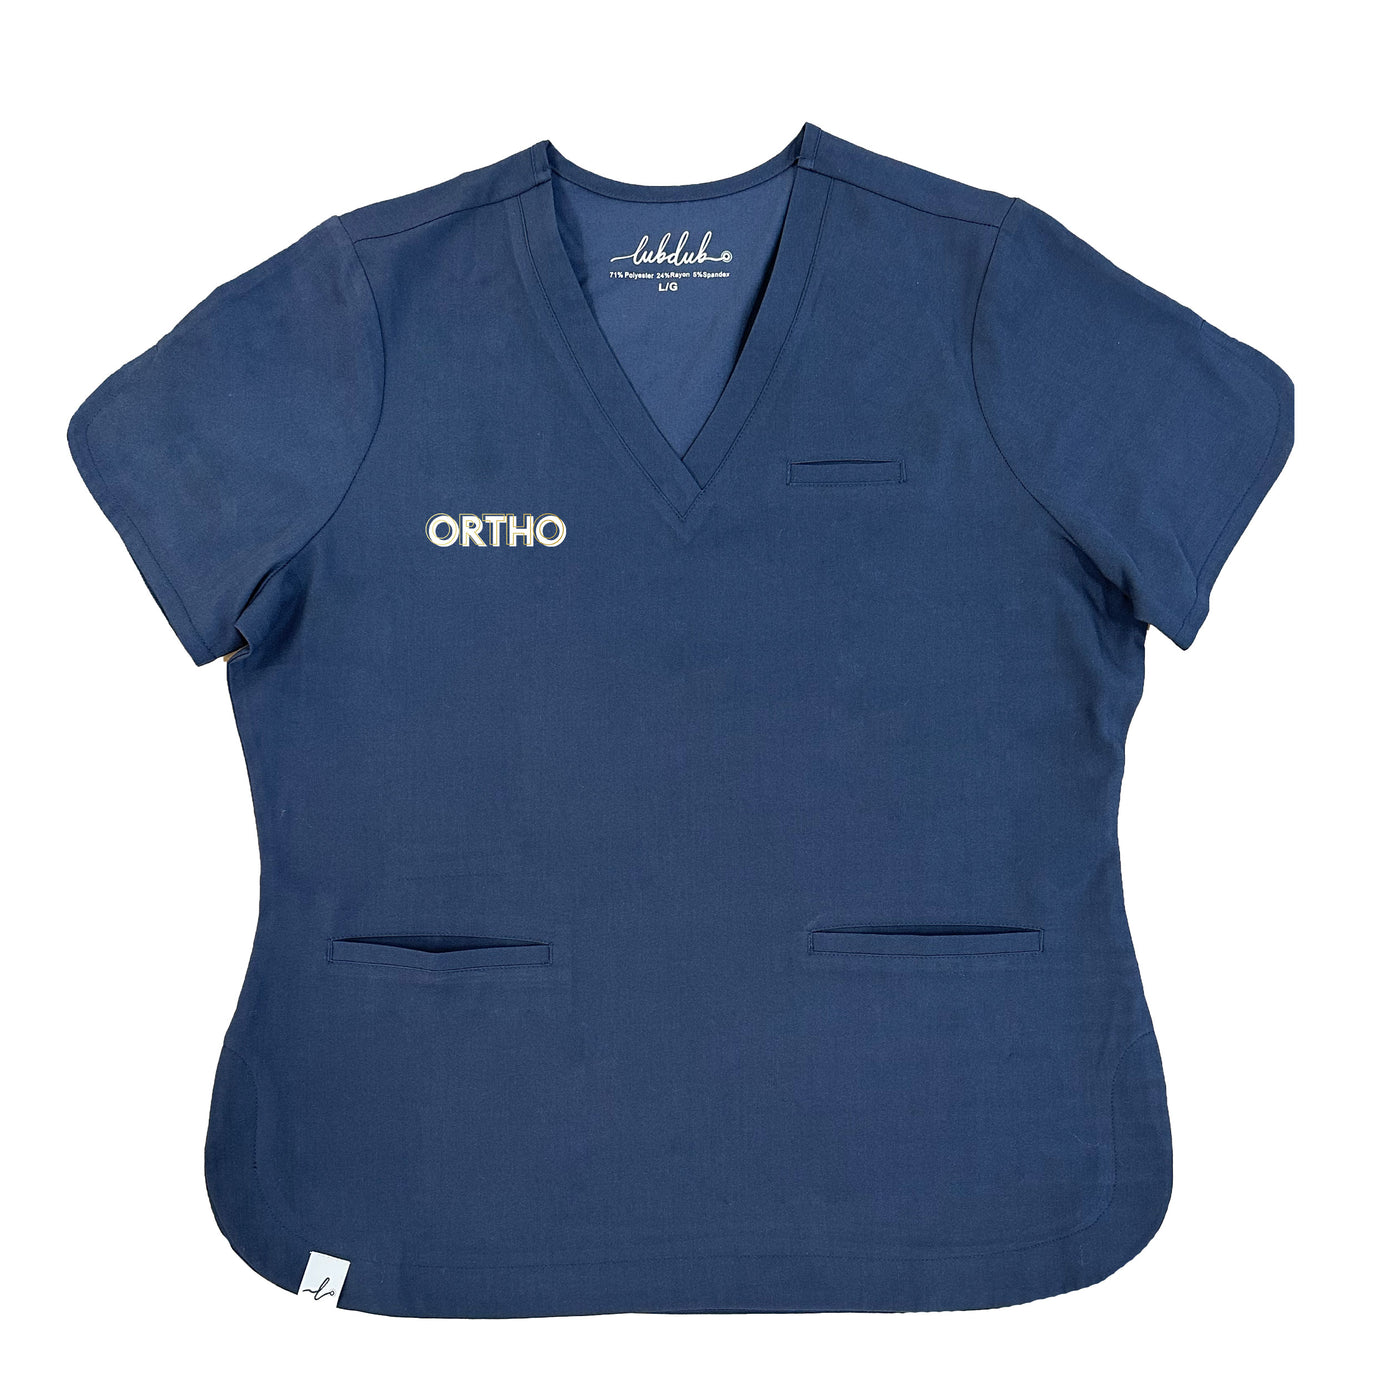 Ortho Creds - Rosa Scrub Top